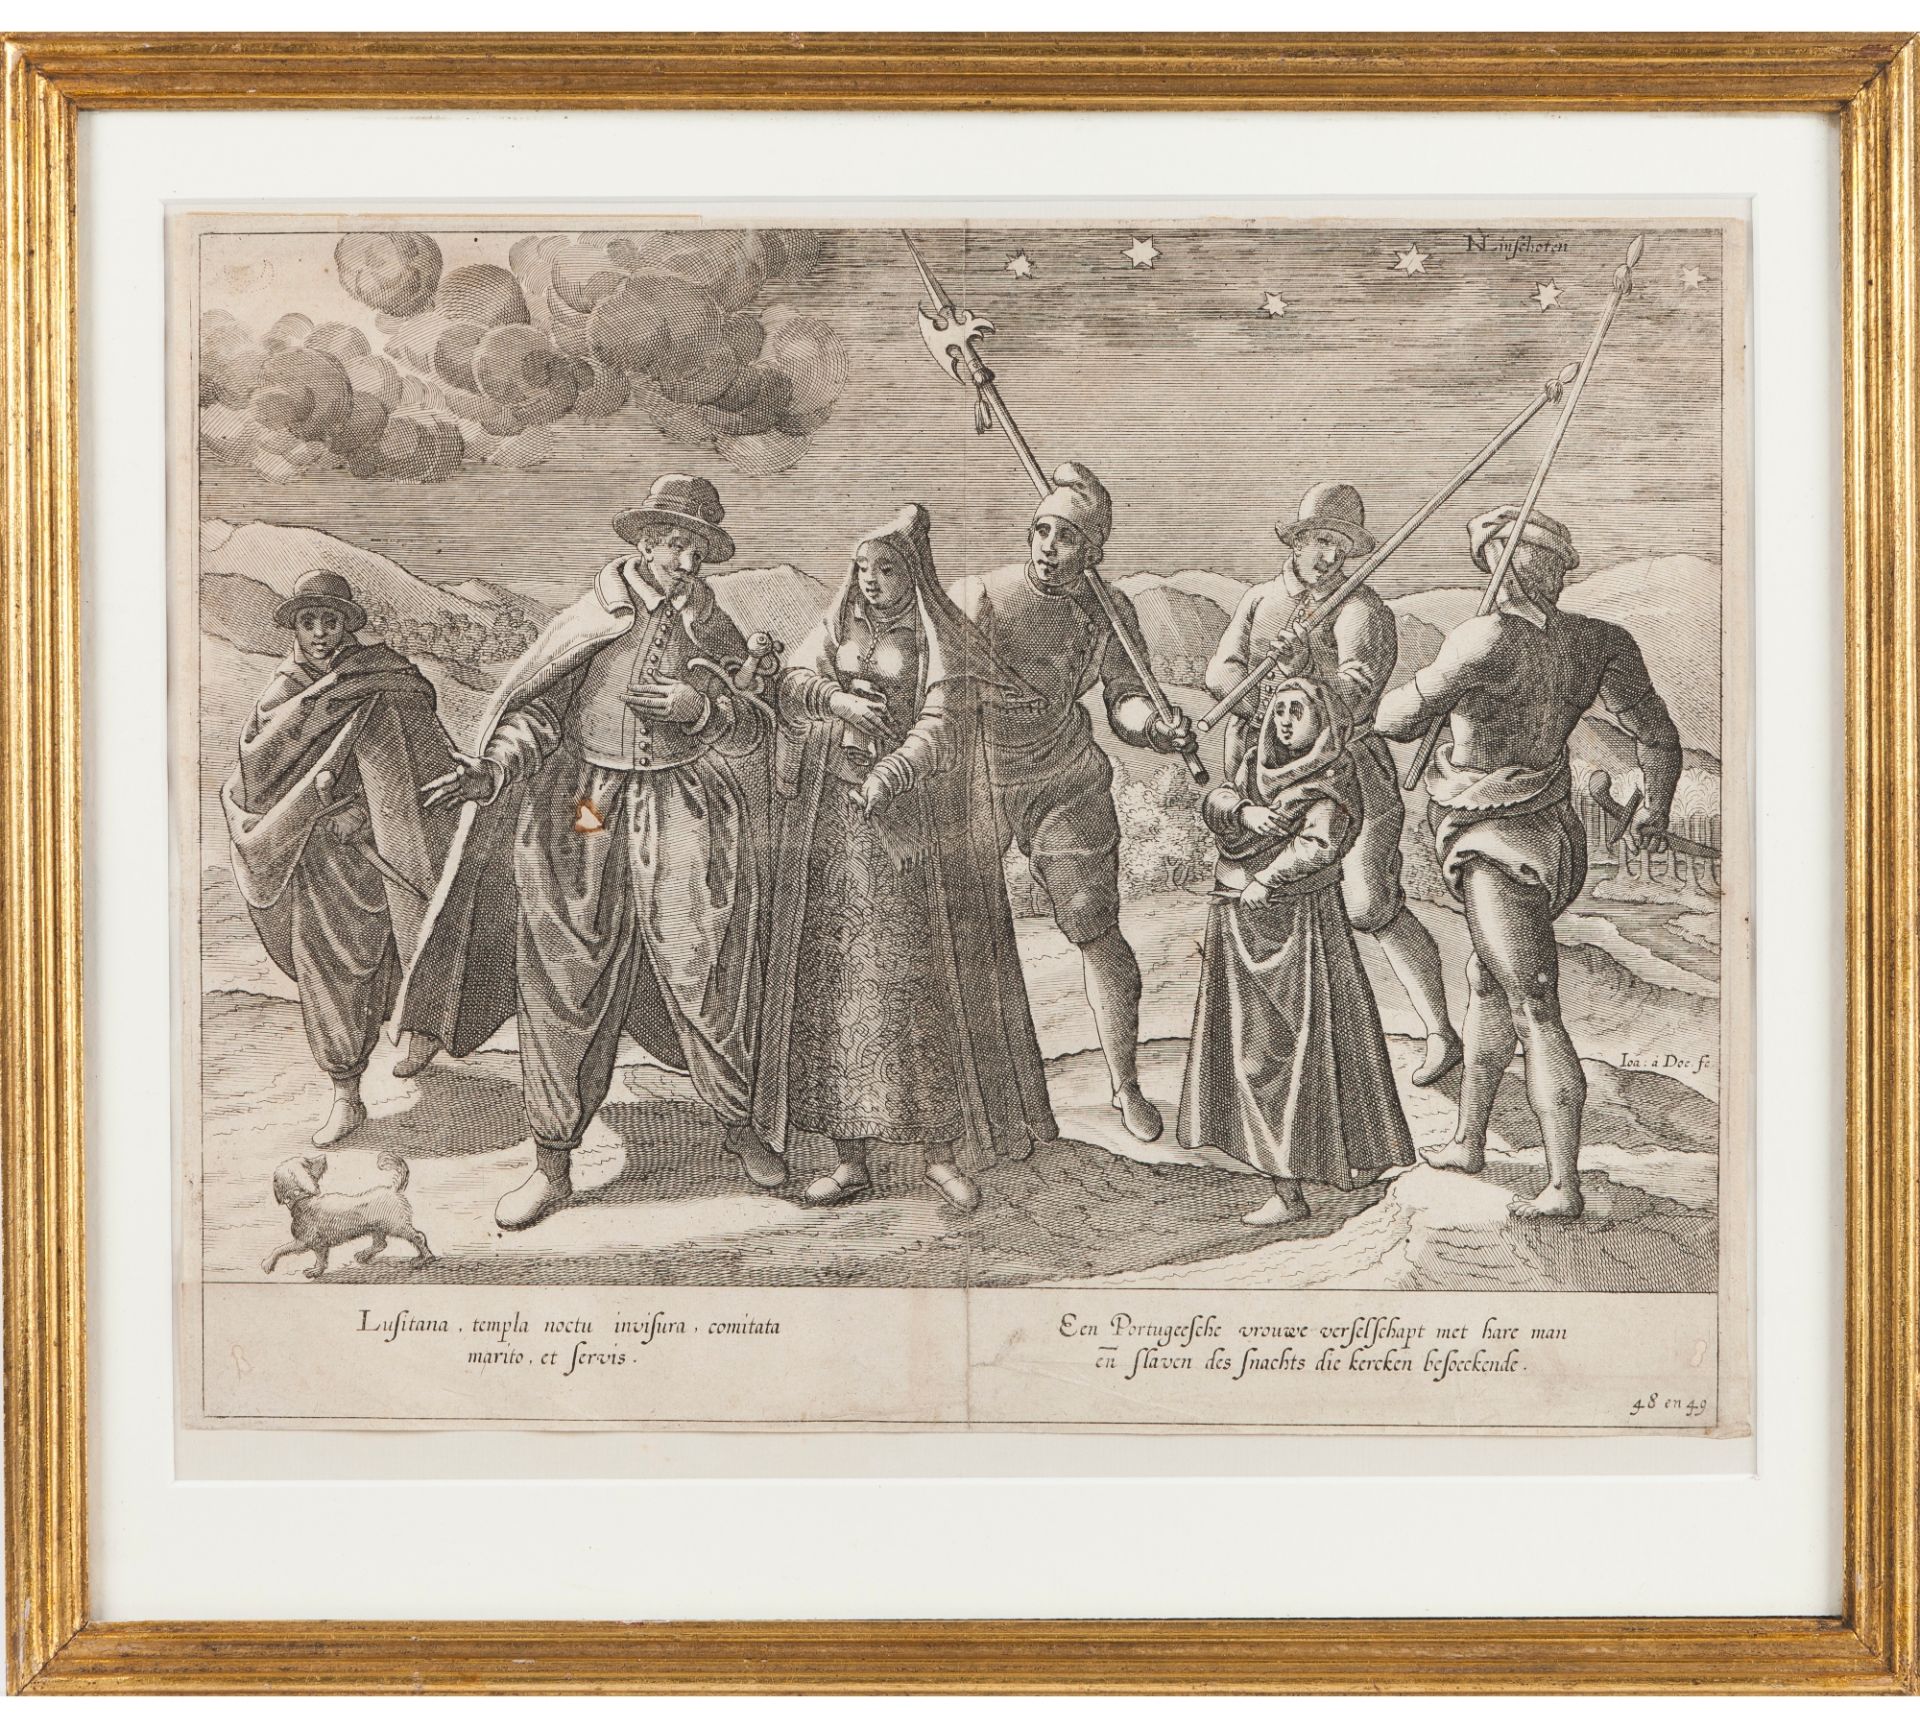 Jan Huygen van Linschoten ( 1563-1611) "Lusitana templa nocturna invisura comitata marito et servis"